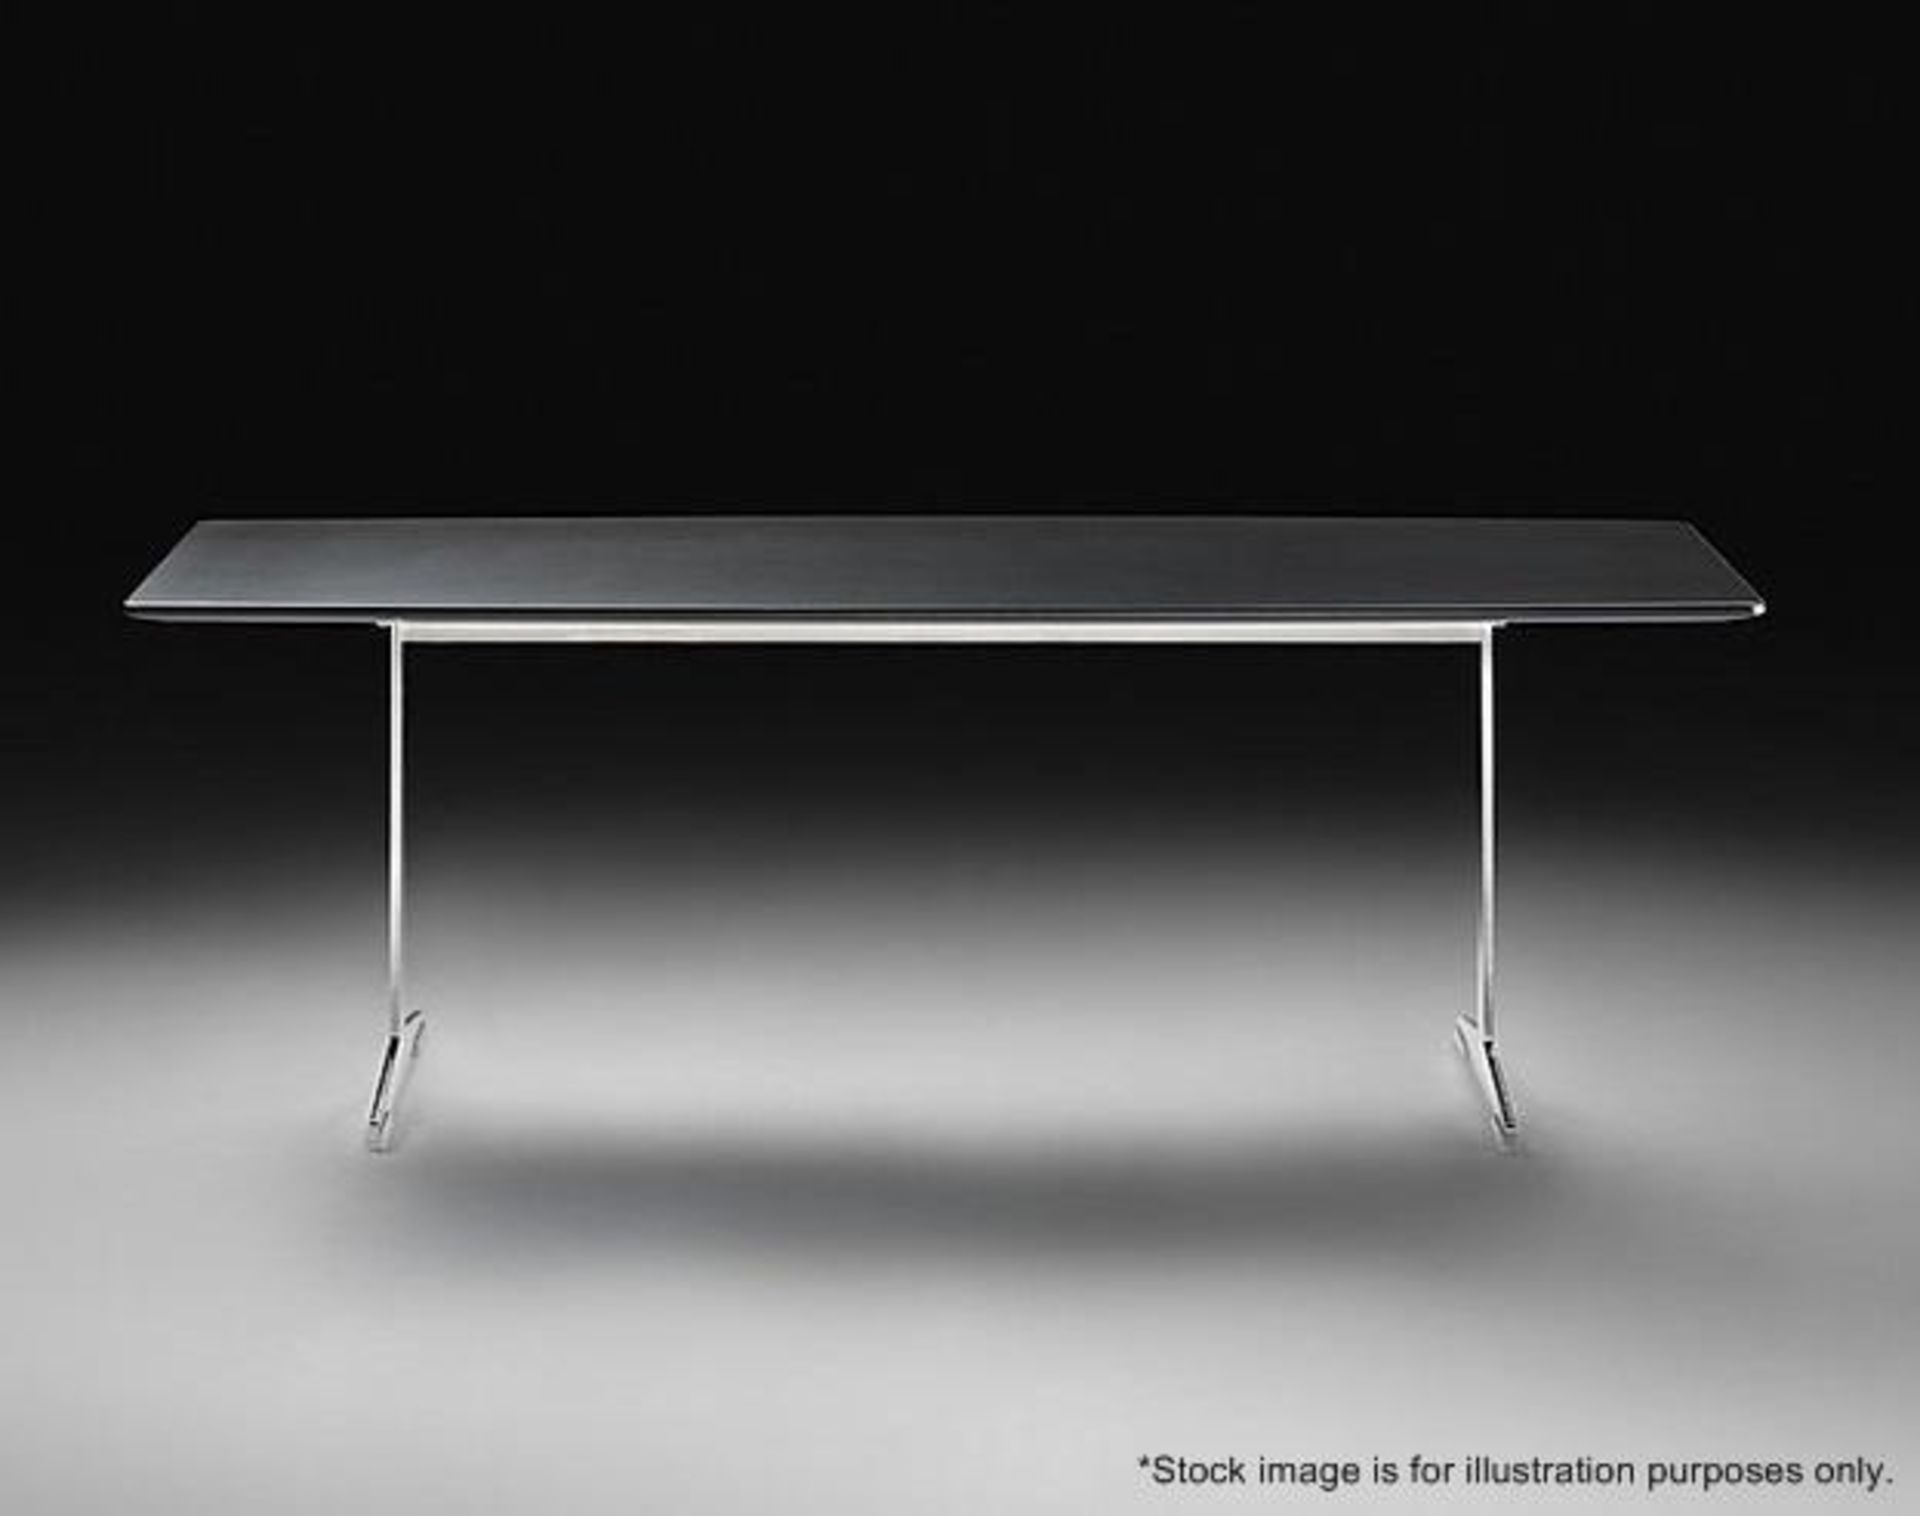 1 x FLEXFORM 'Cestone' Italian Made Designer Slot-In Sidetable In Dove Grey & Chrome - RRP £1,573